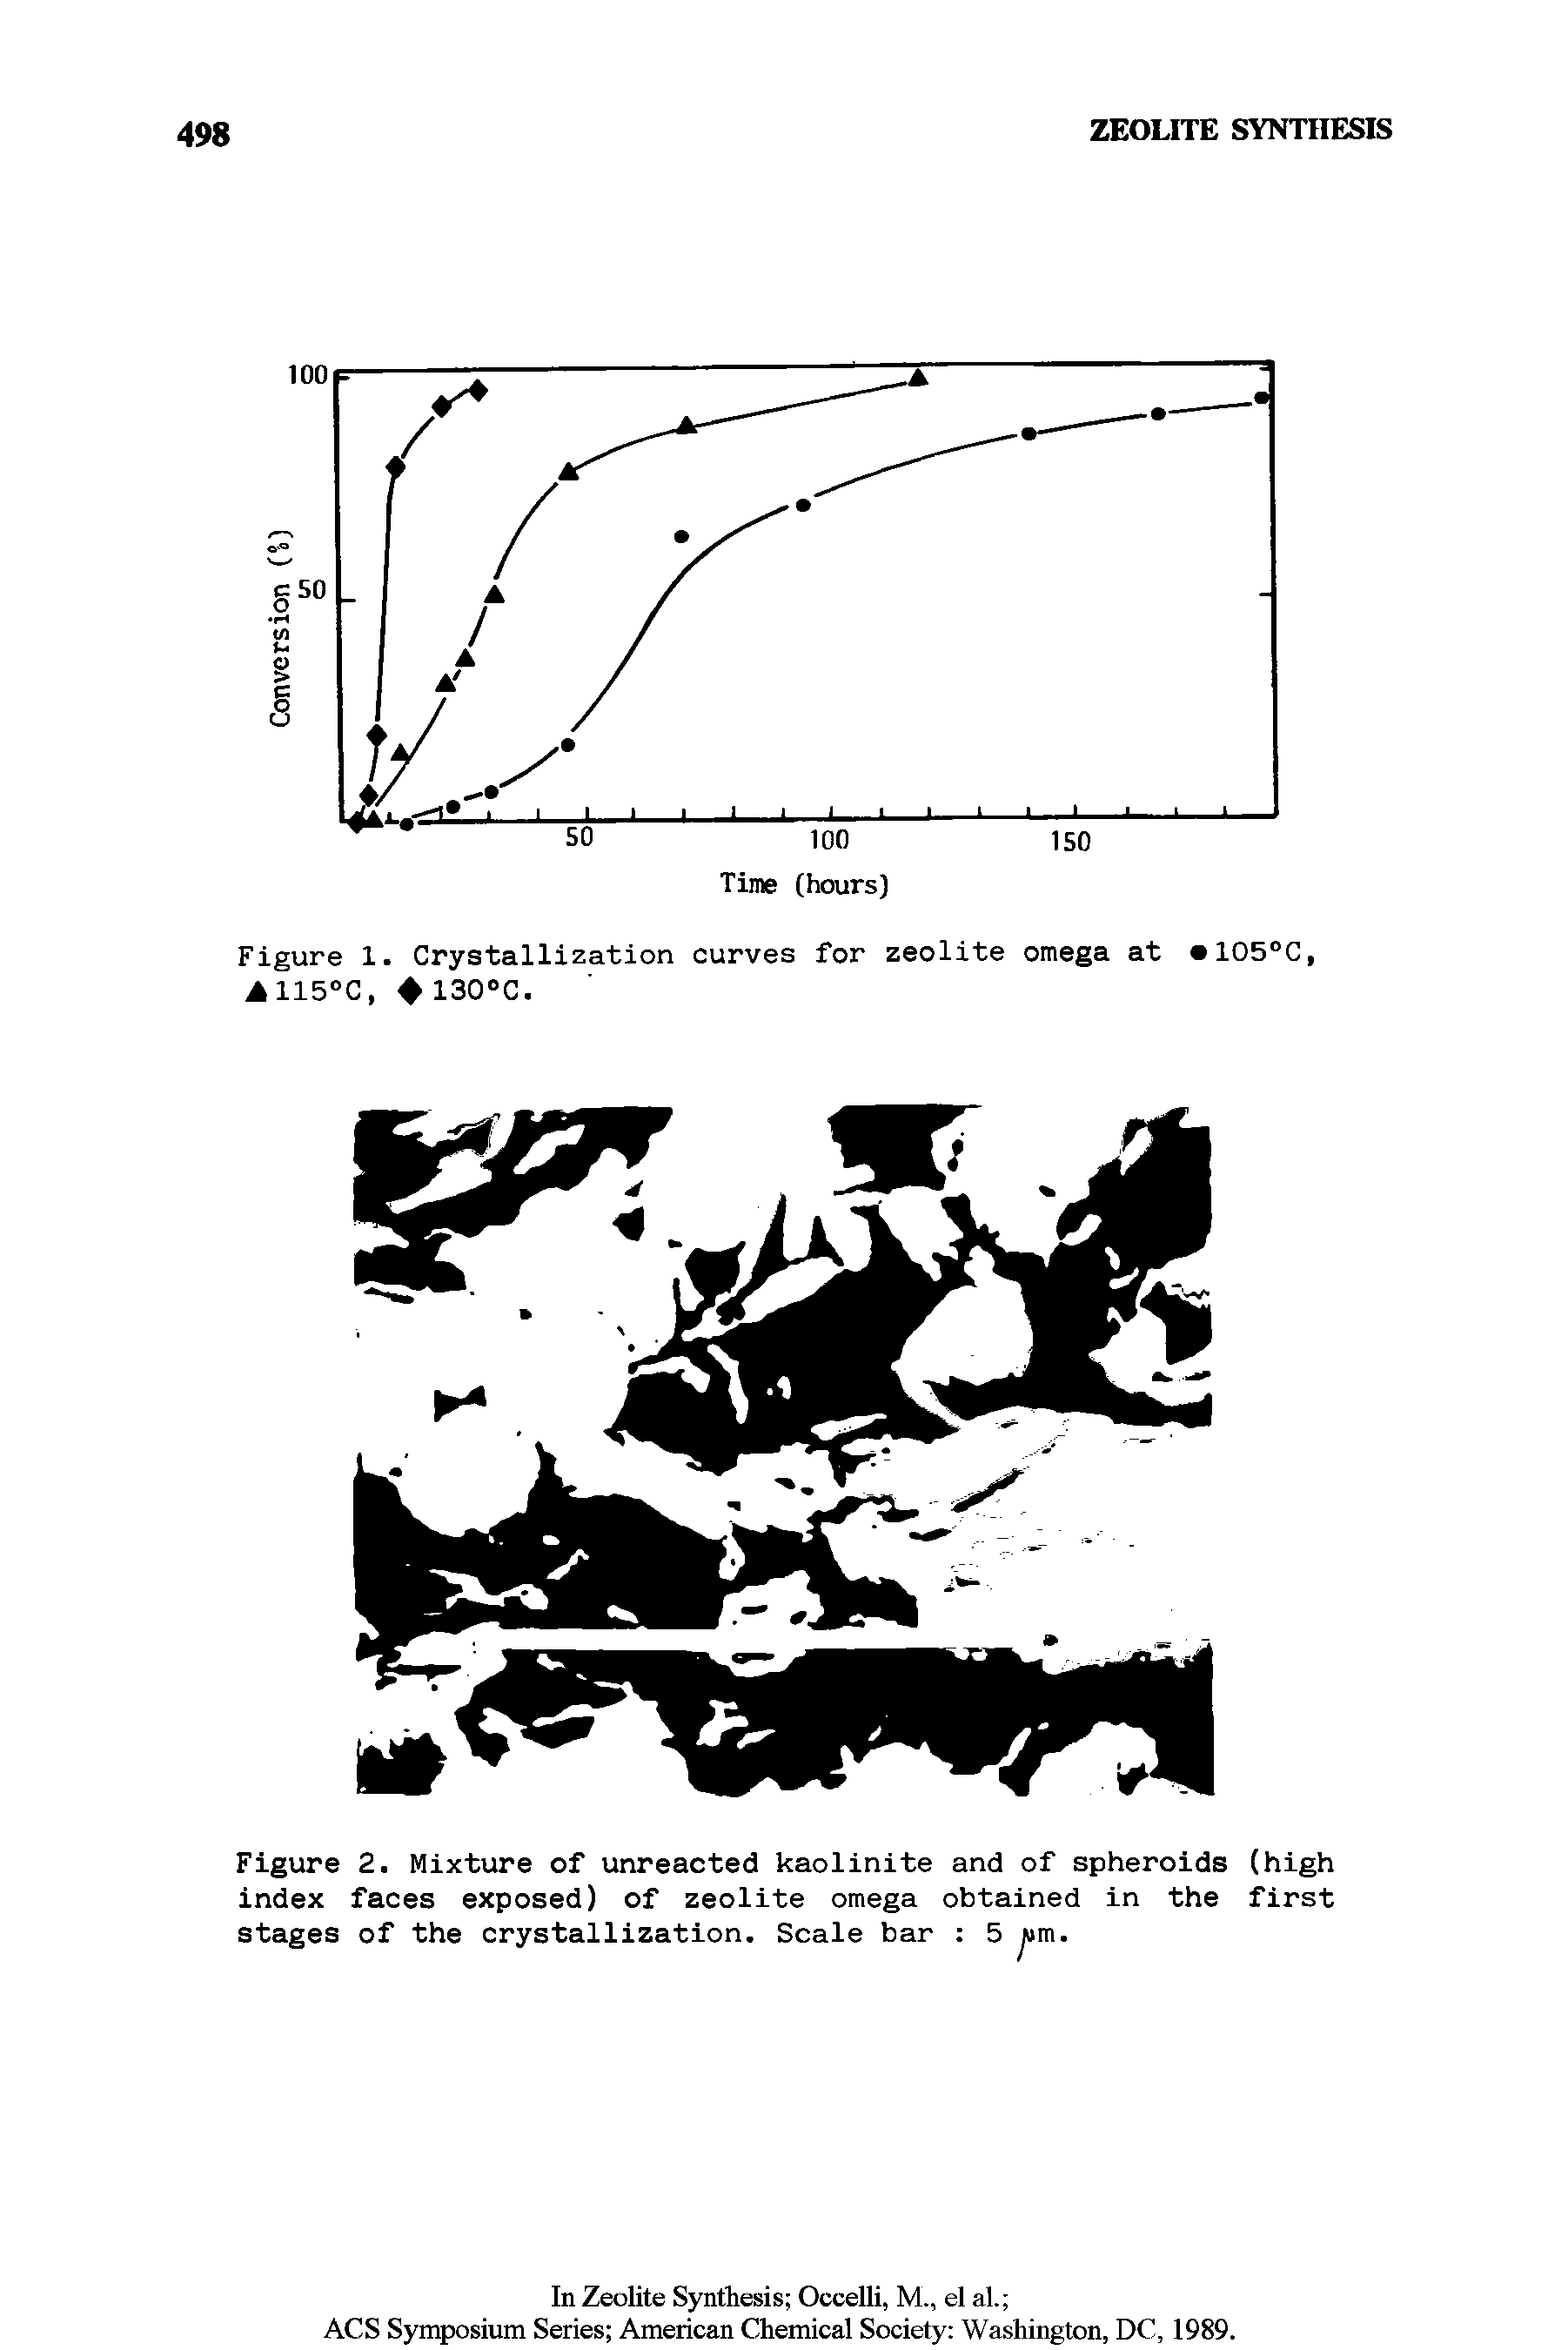 Figure X. Crystallization curves for zeolite omega at 105°C, A115°C, + 130°C.